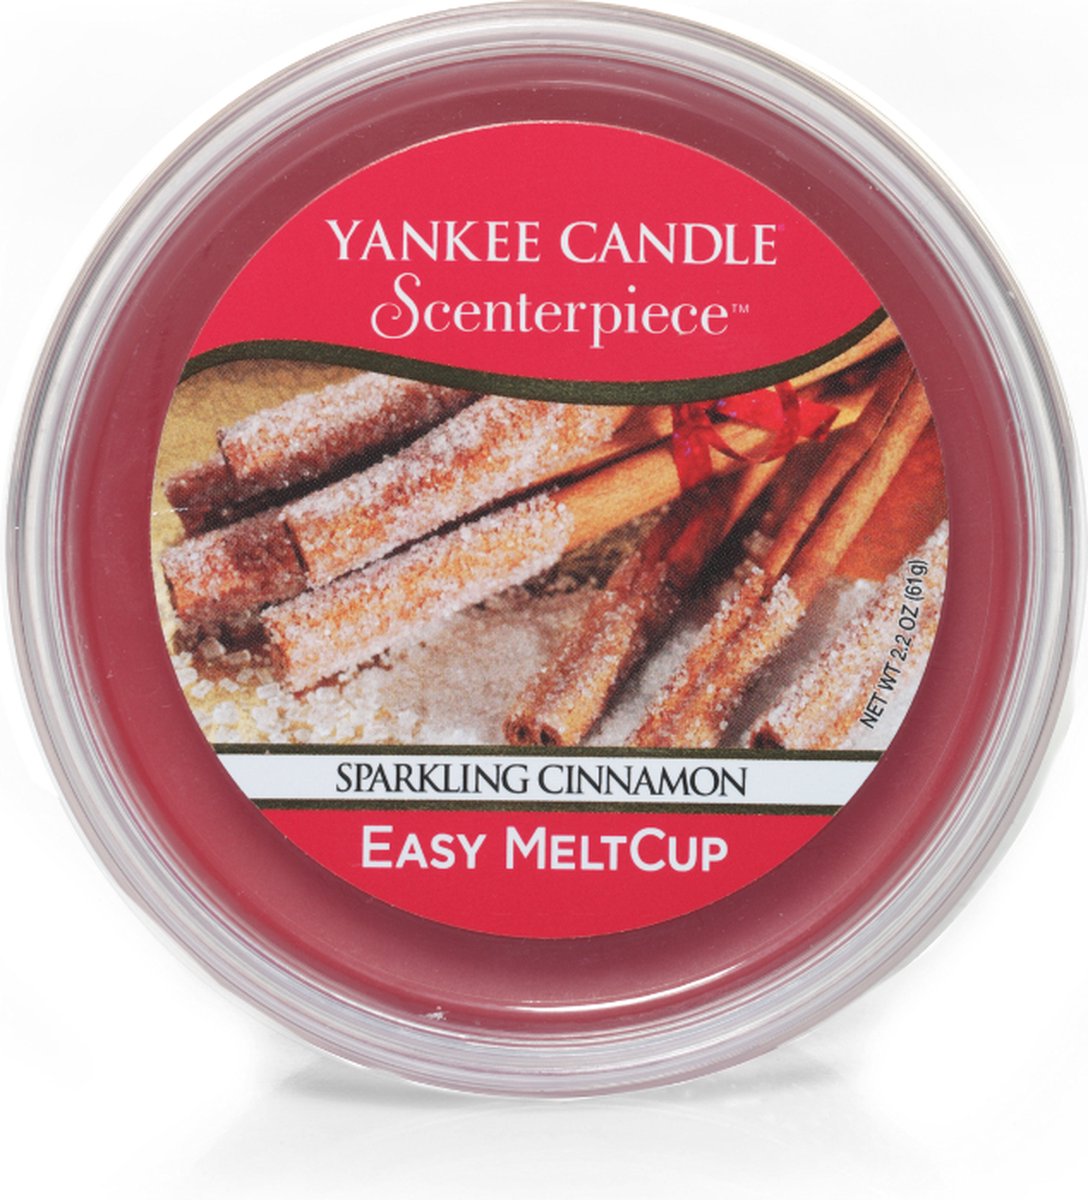 Yankee Candle Scenterpiece Sparkling Cinnamon